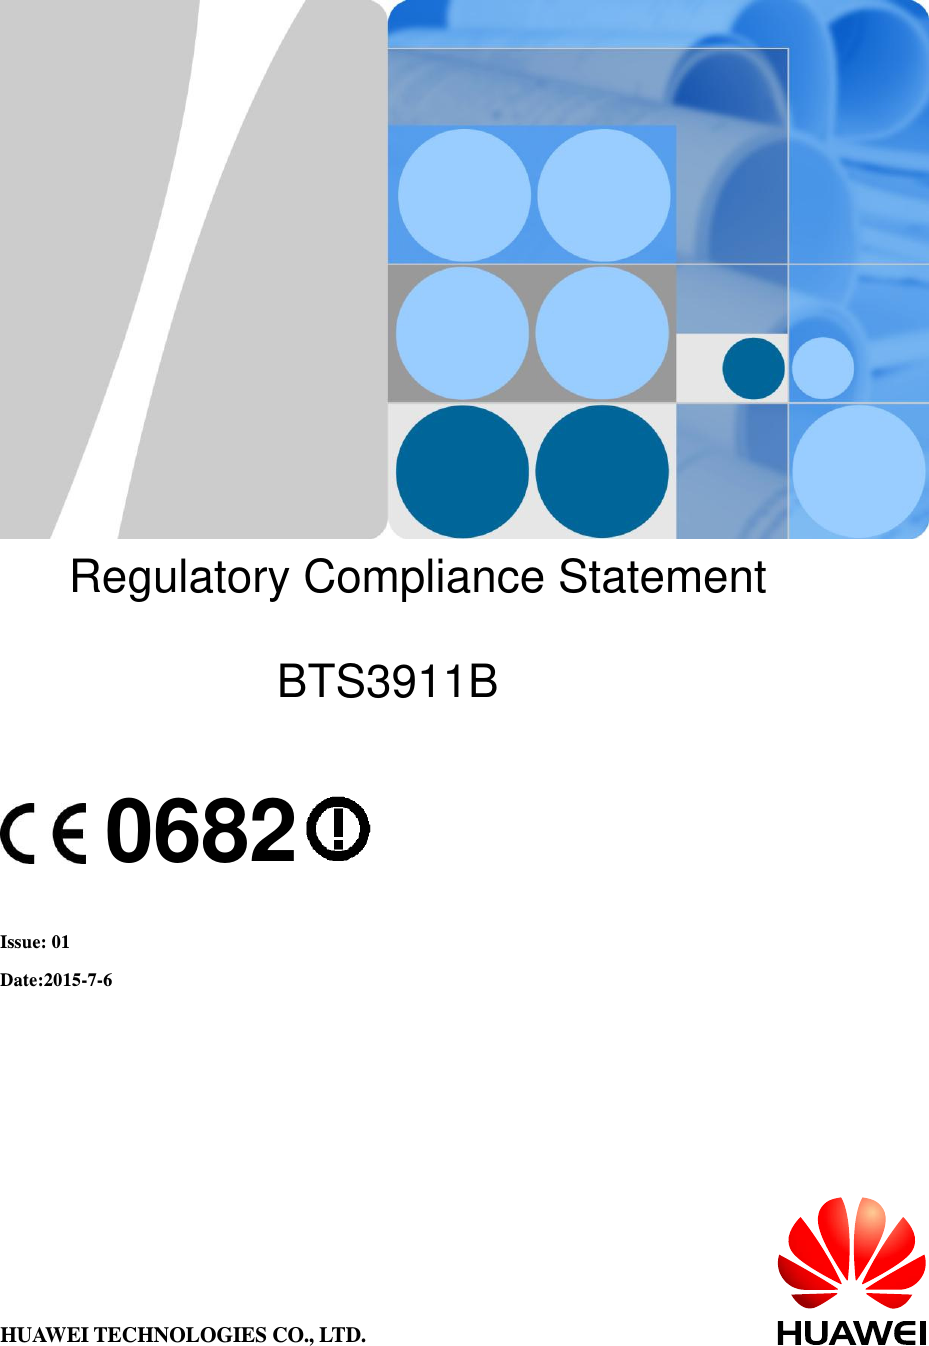            Regulatory Compliance Statement  BTS3911B       0682   Issue: 01  Date:2015-7-6  HUAWEI TECHNOLOGIES CO., LTD. 